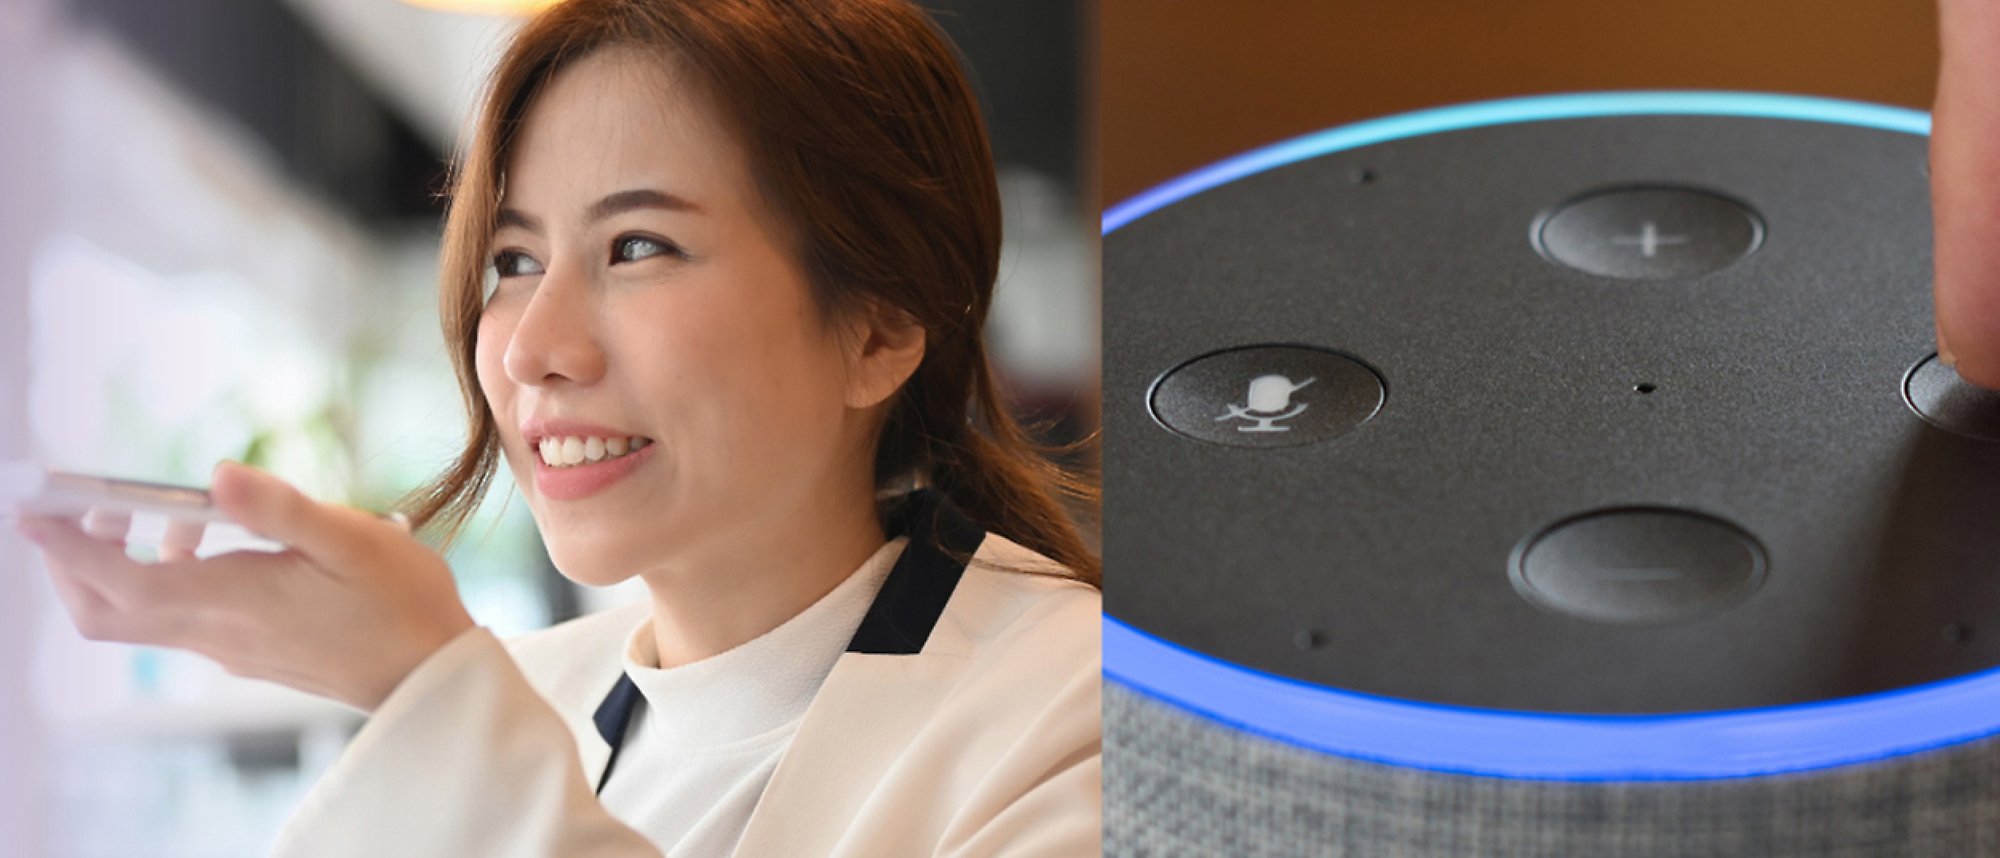 Жена, говореща по телефон и изображение на Amazon Alexa със сини светлини и контрол на звука